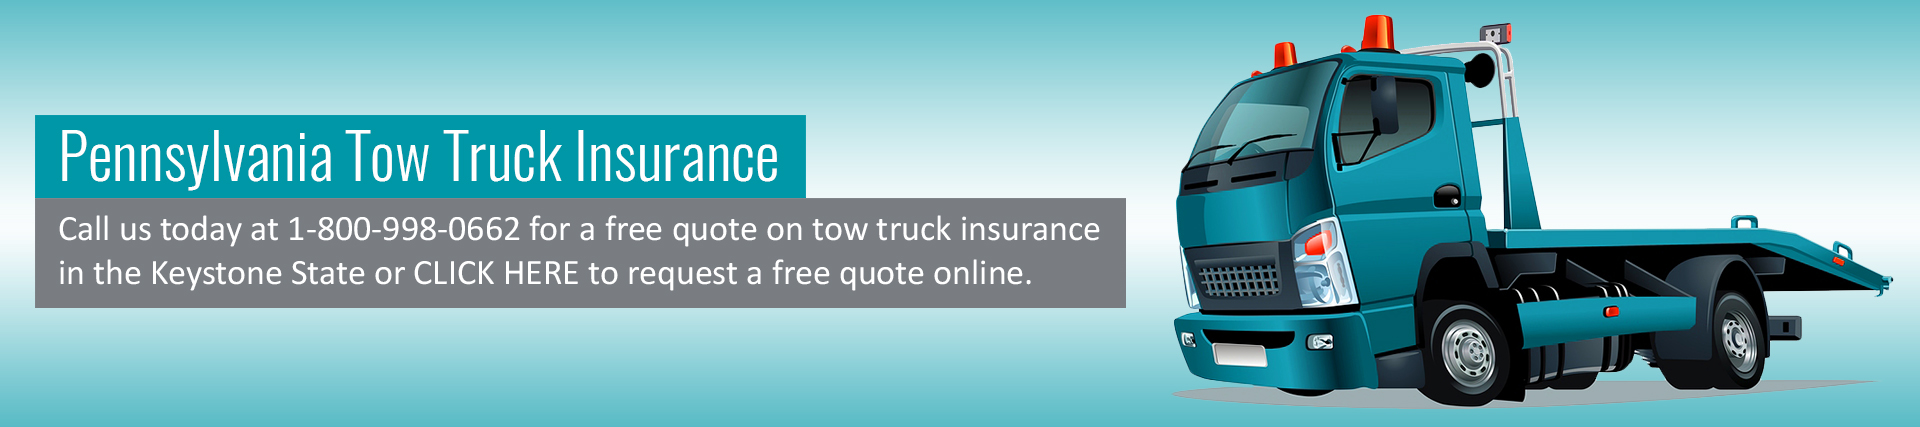 Tow Truck Insurance in Pennsylvania